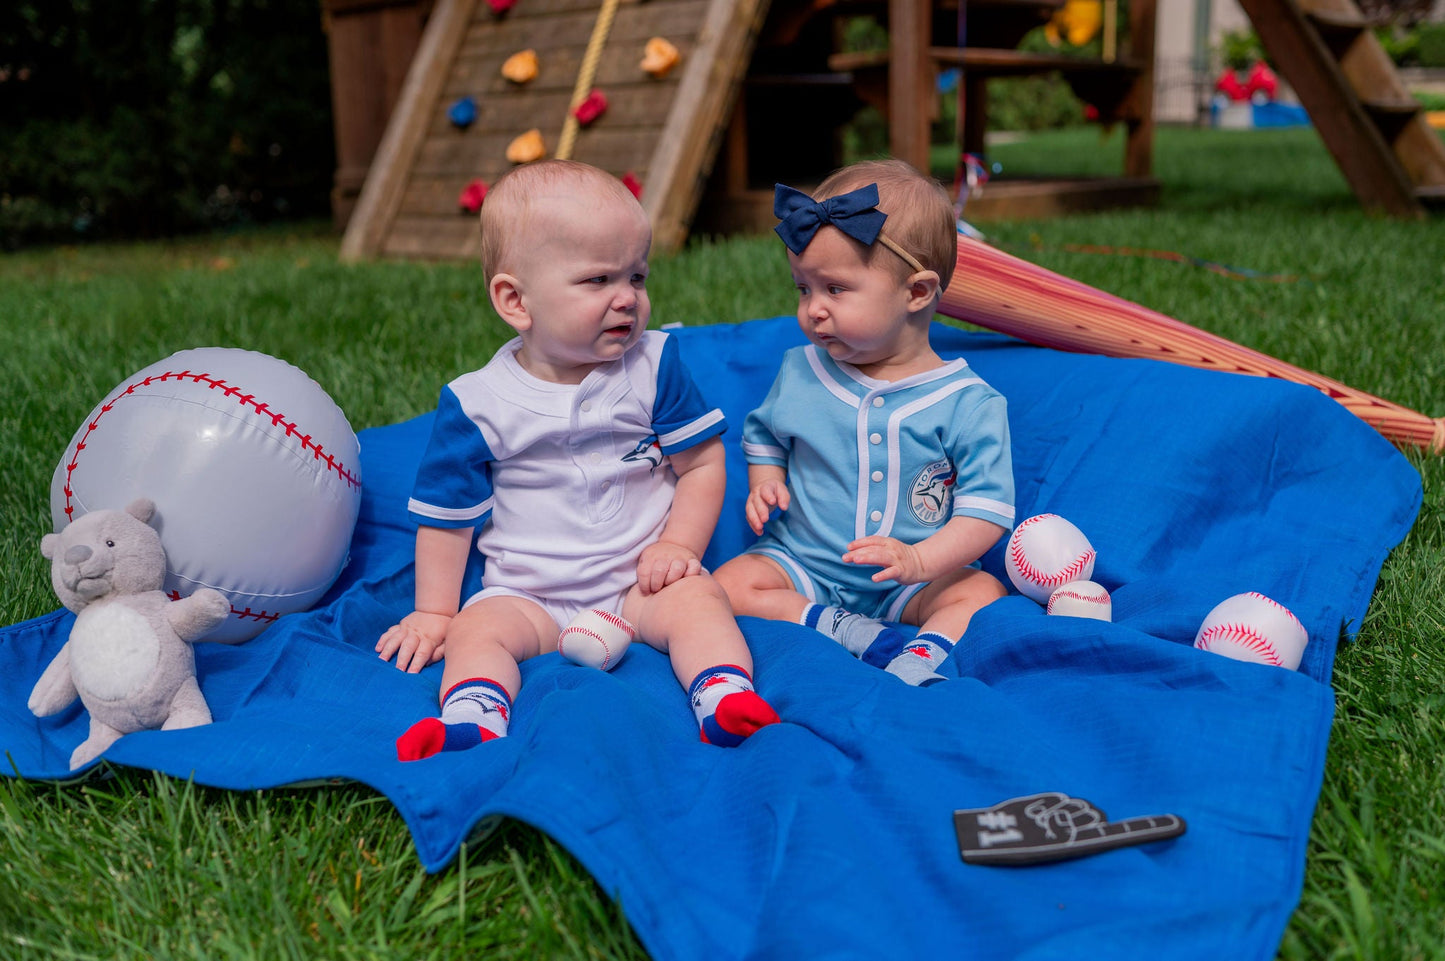 Customizable MLB Toronto Blue Jays Baby Powder Blue Romper